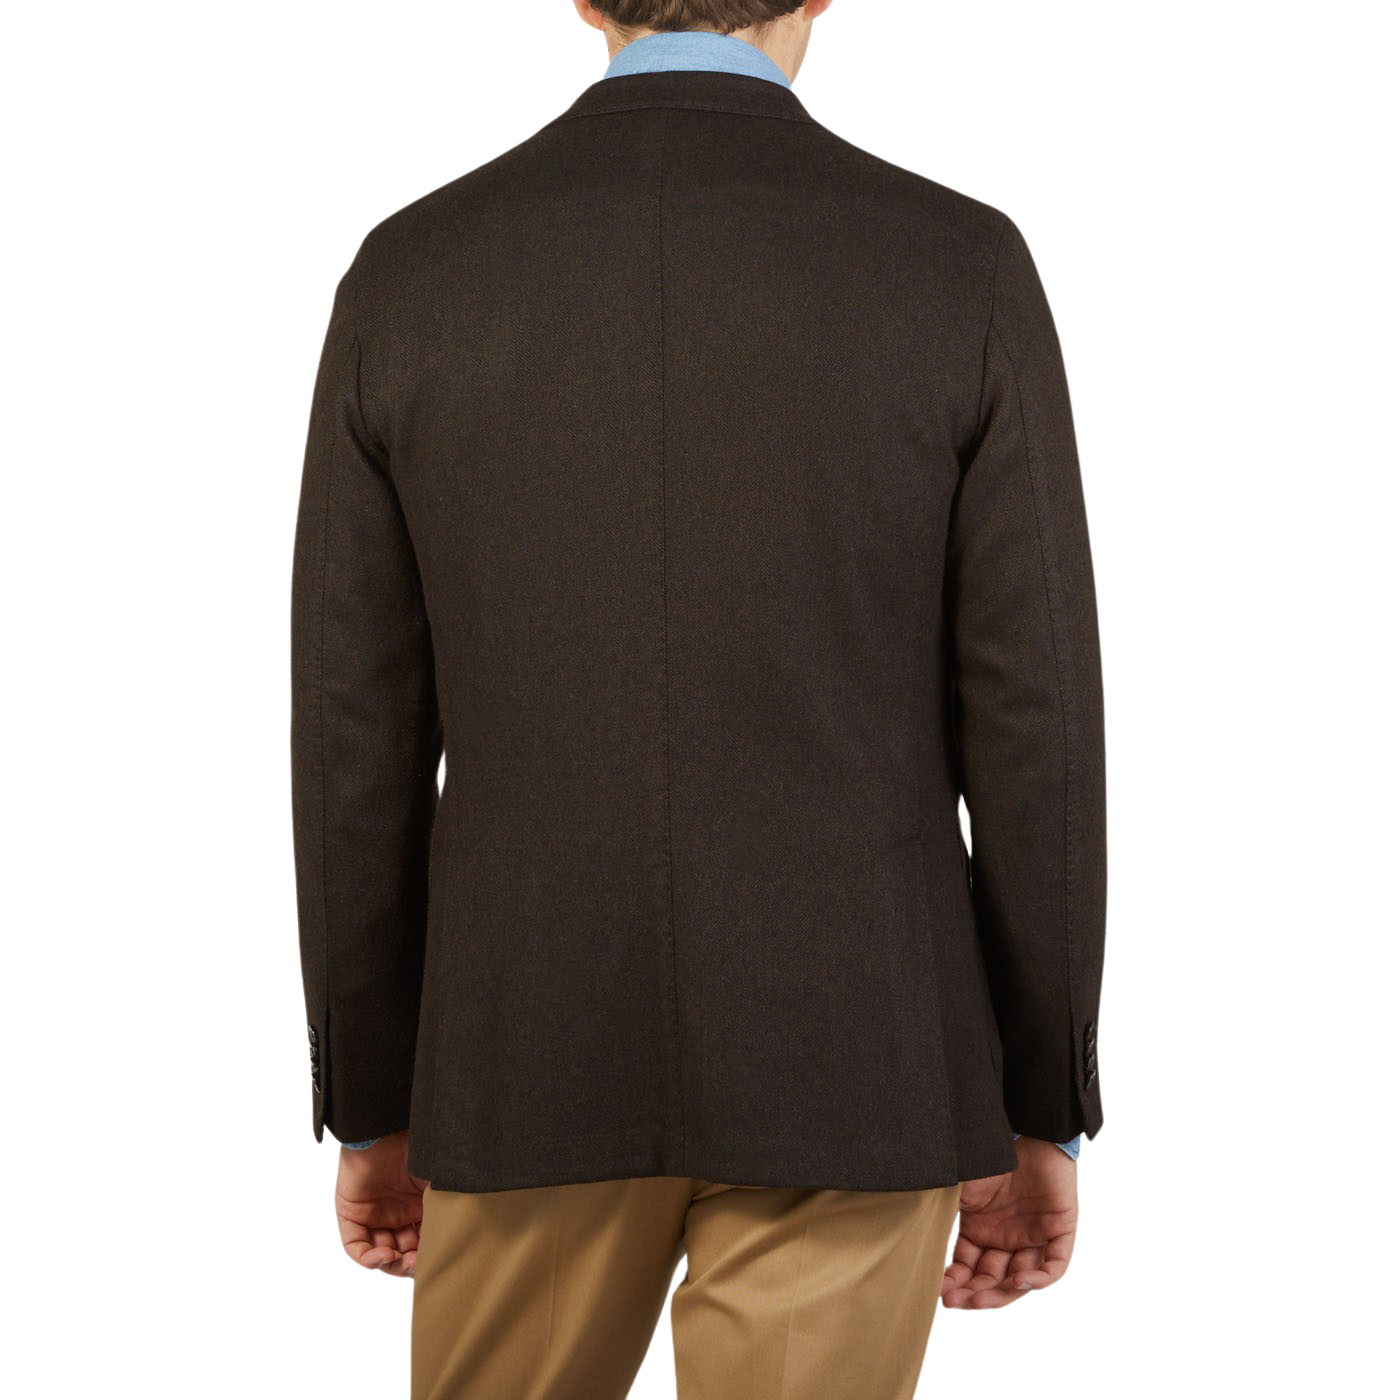 The back view of a man wearing an unstructured Boglioli Brown Herringbone Wool K Jacket.